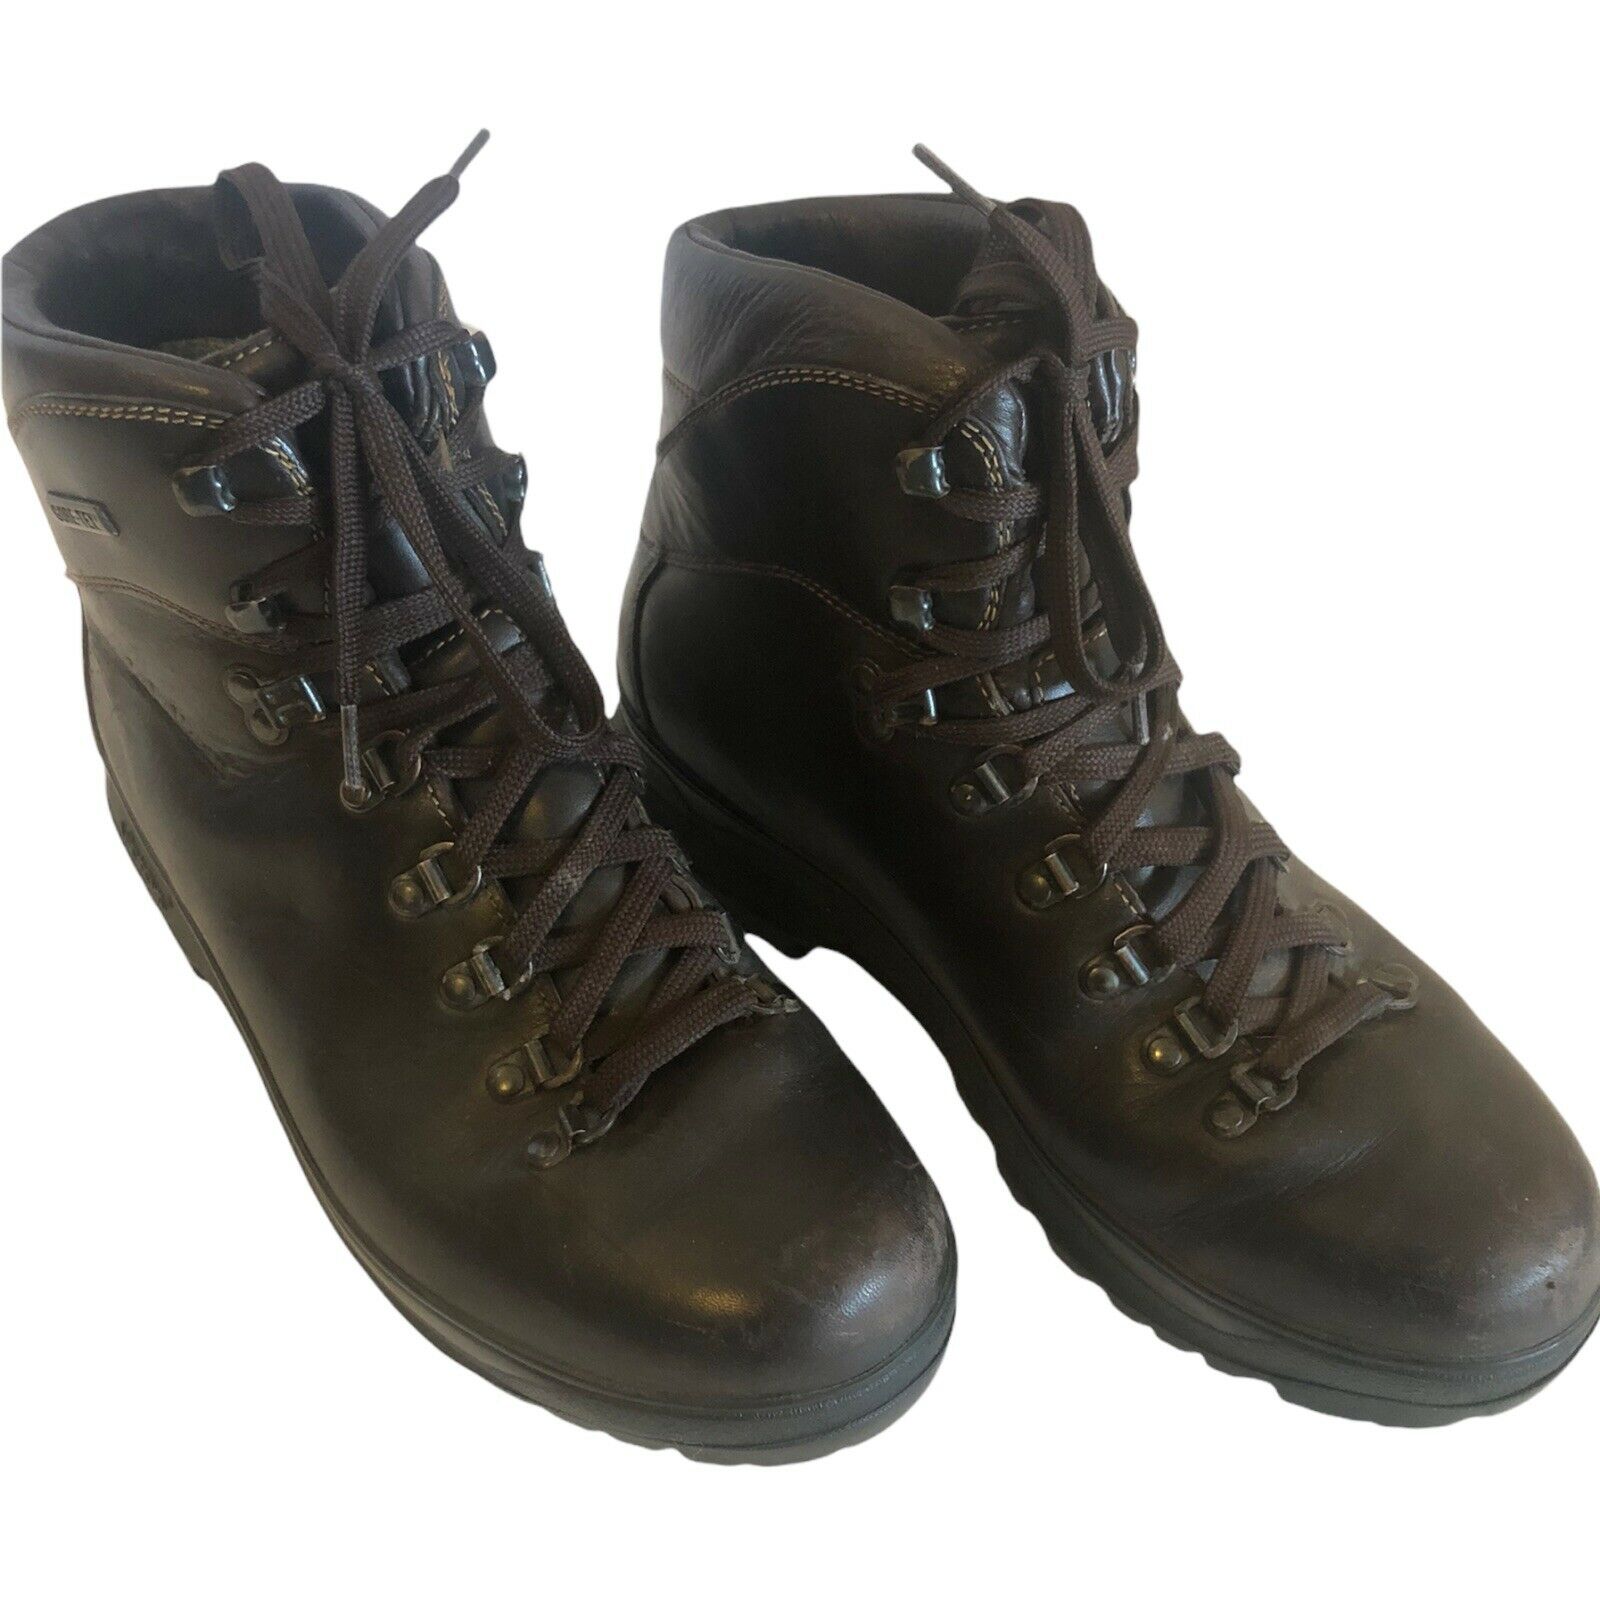 LL BEAN Cresta GORE TEX Mid Hiking Boots Vibram Men's Size 9M Brown Italy